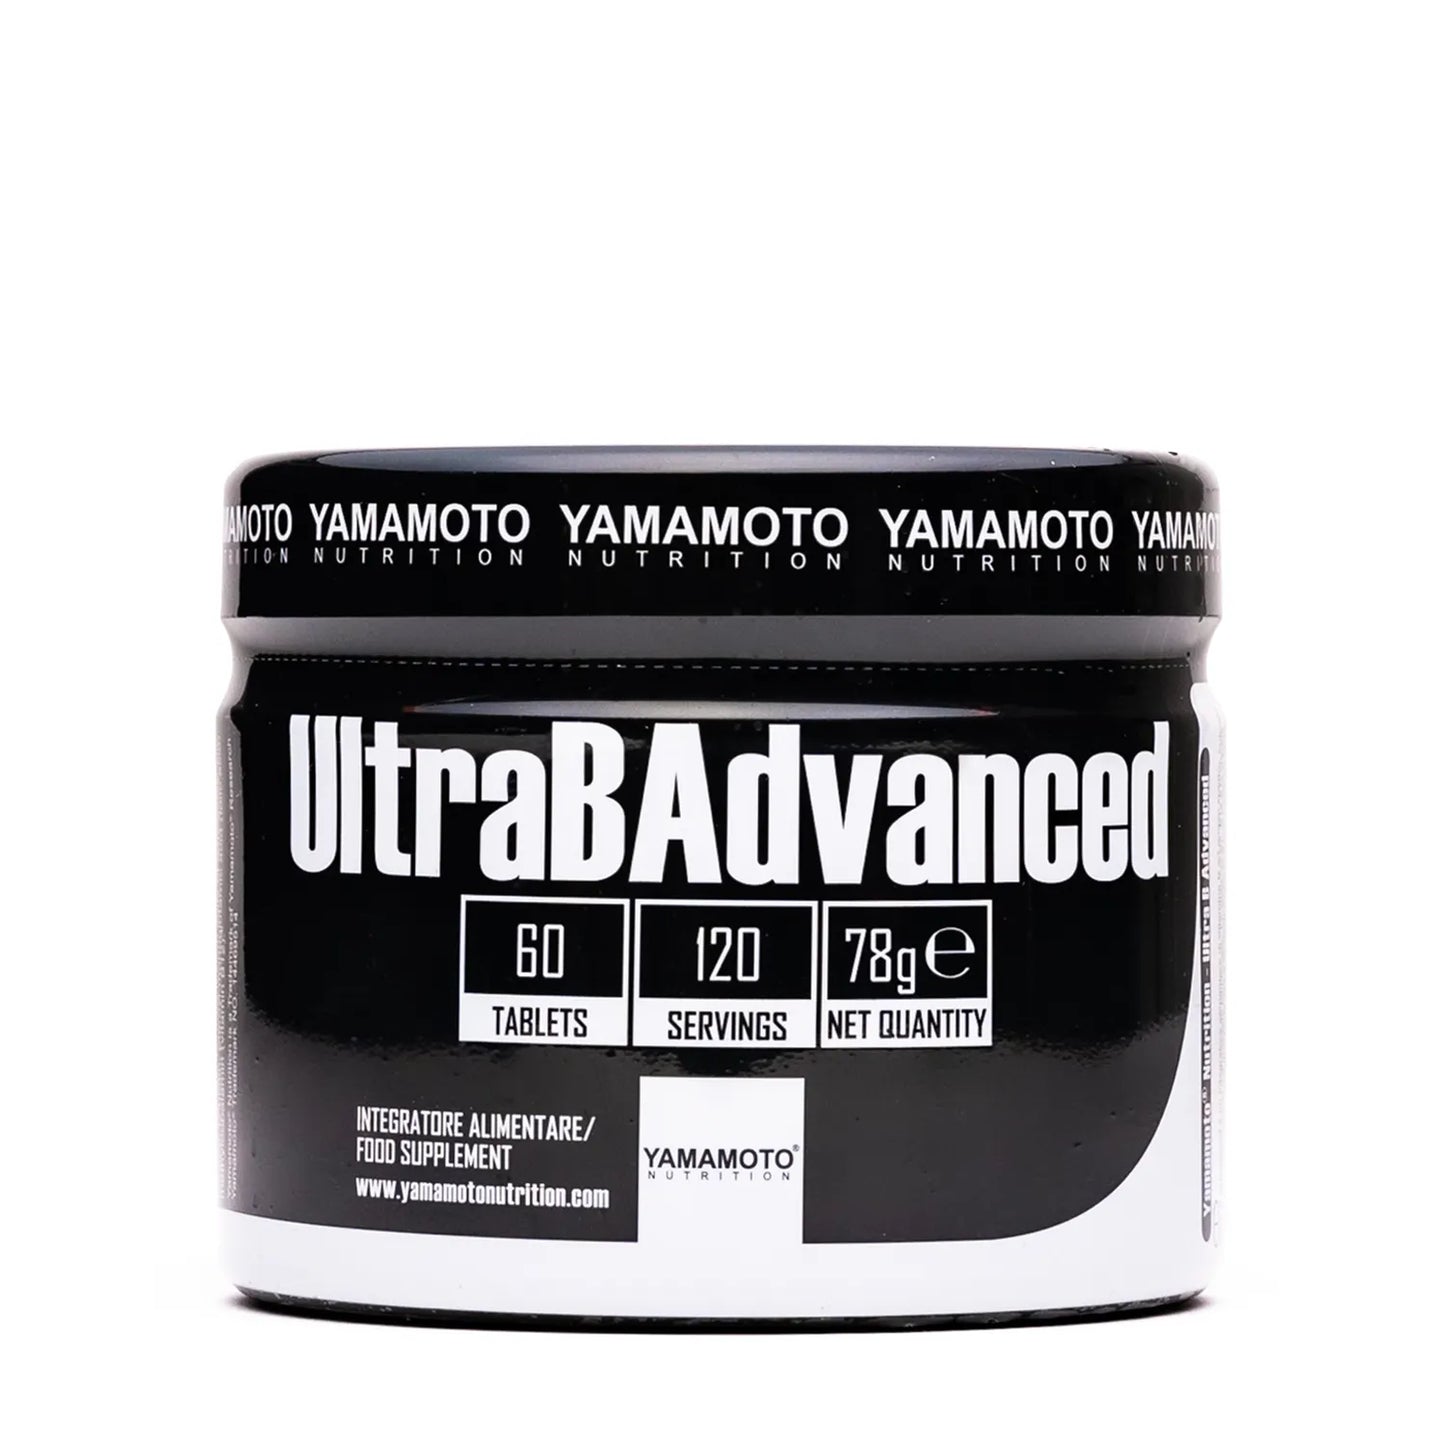 YAMAMOTO - ULTRABADVANCED 60cps